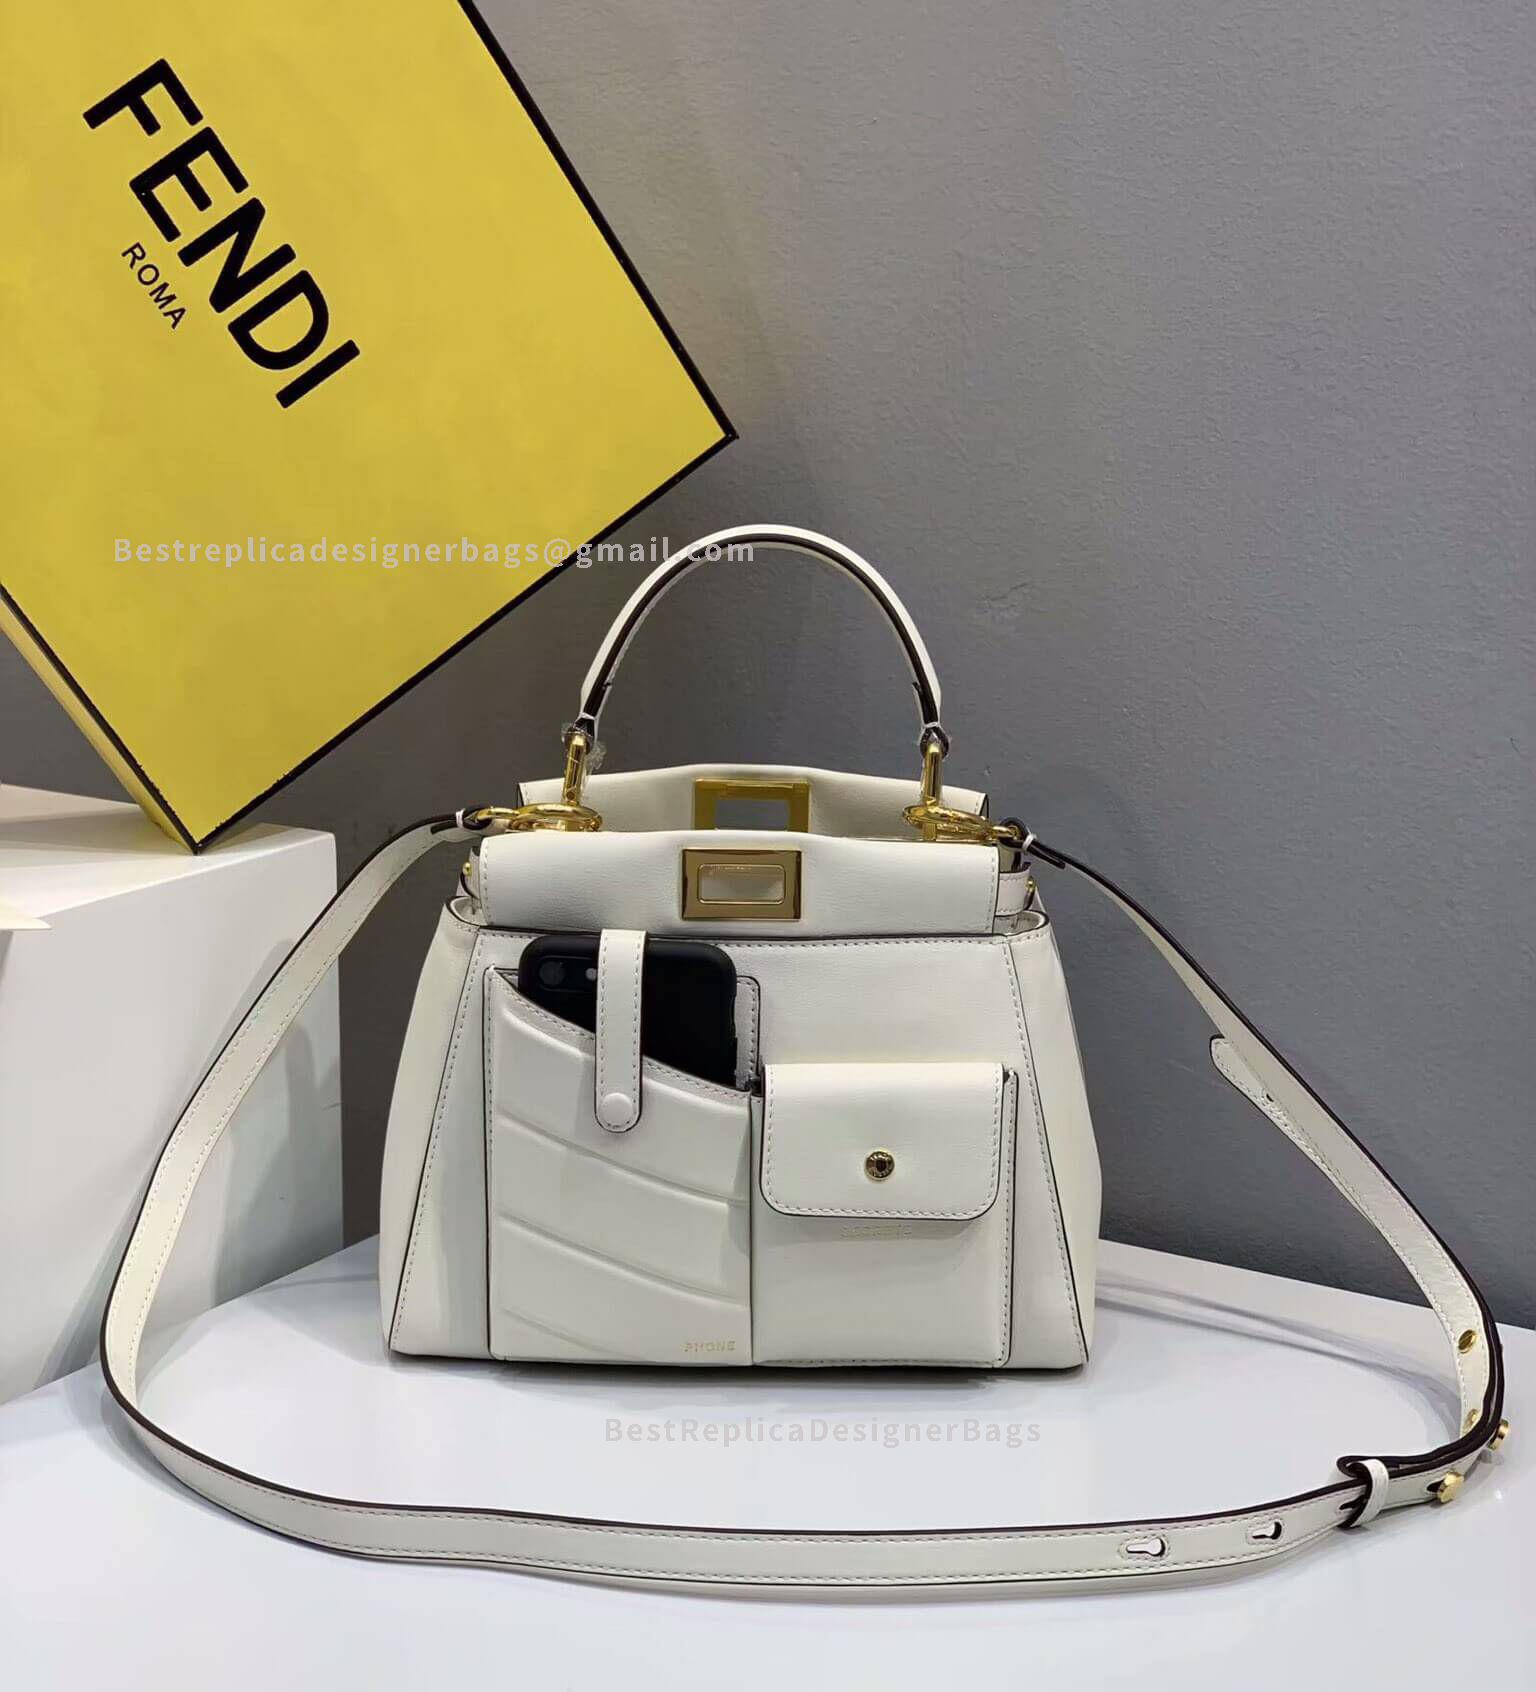 Fendi Peekaboo Iconic Mini White Leather Bag 2113